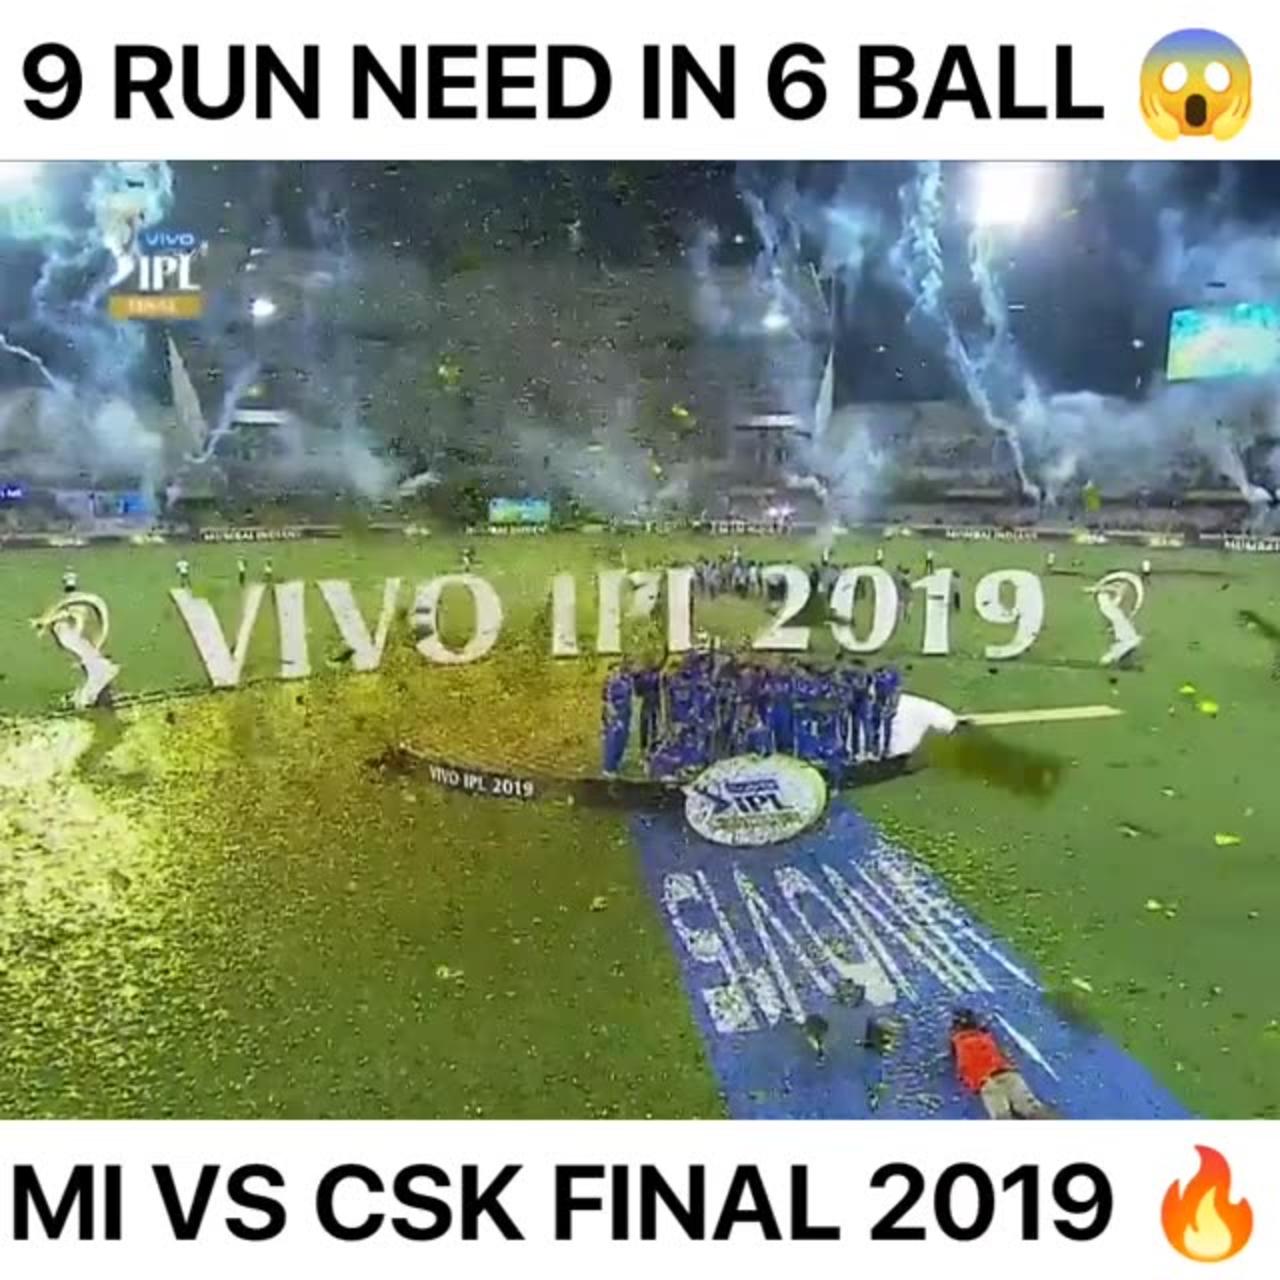 Ipl 2019 final T20 CSK vs MI last over thriller 6 ball 9 runs must watch